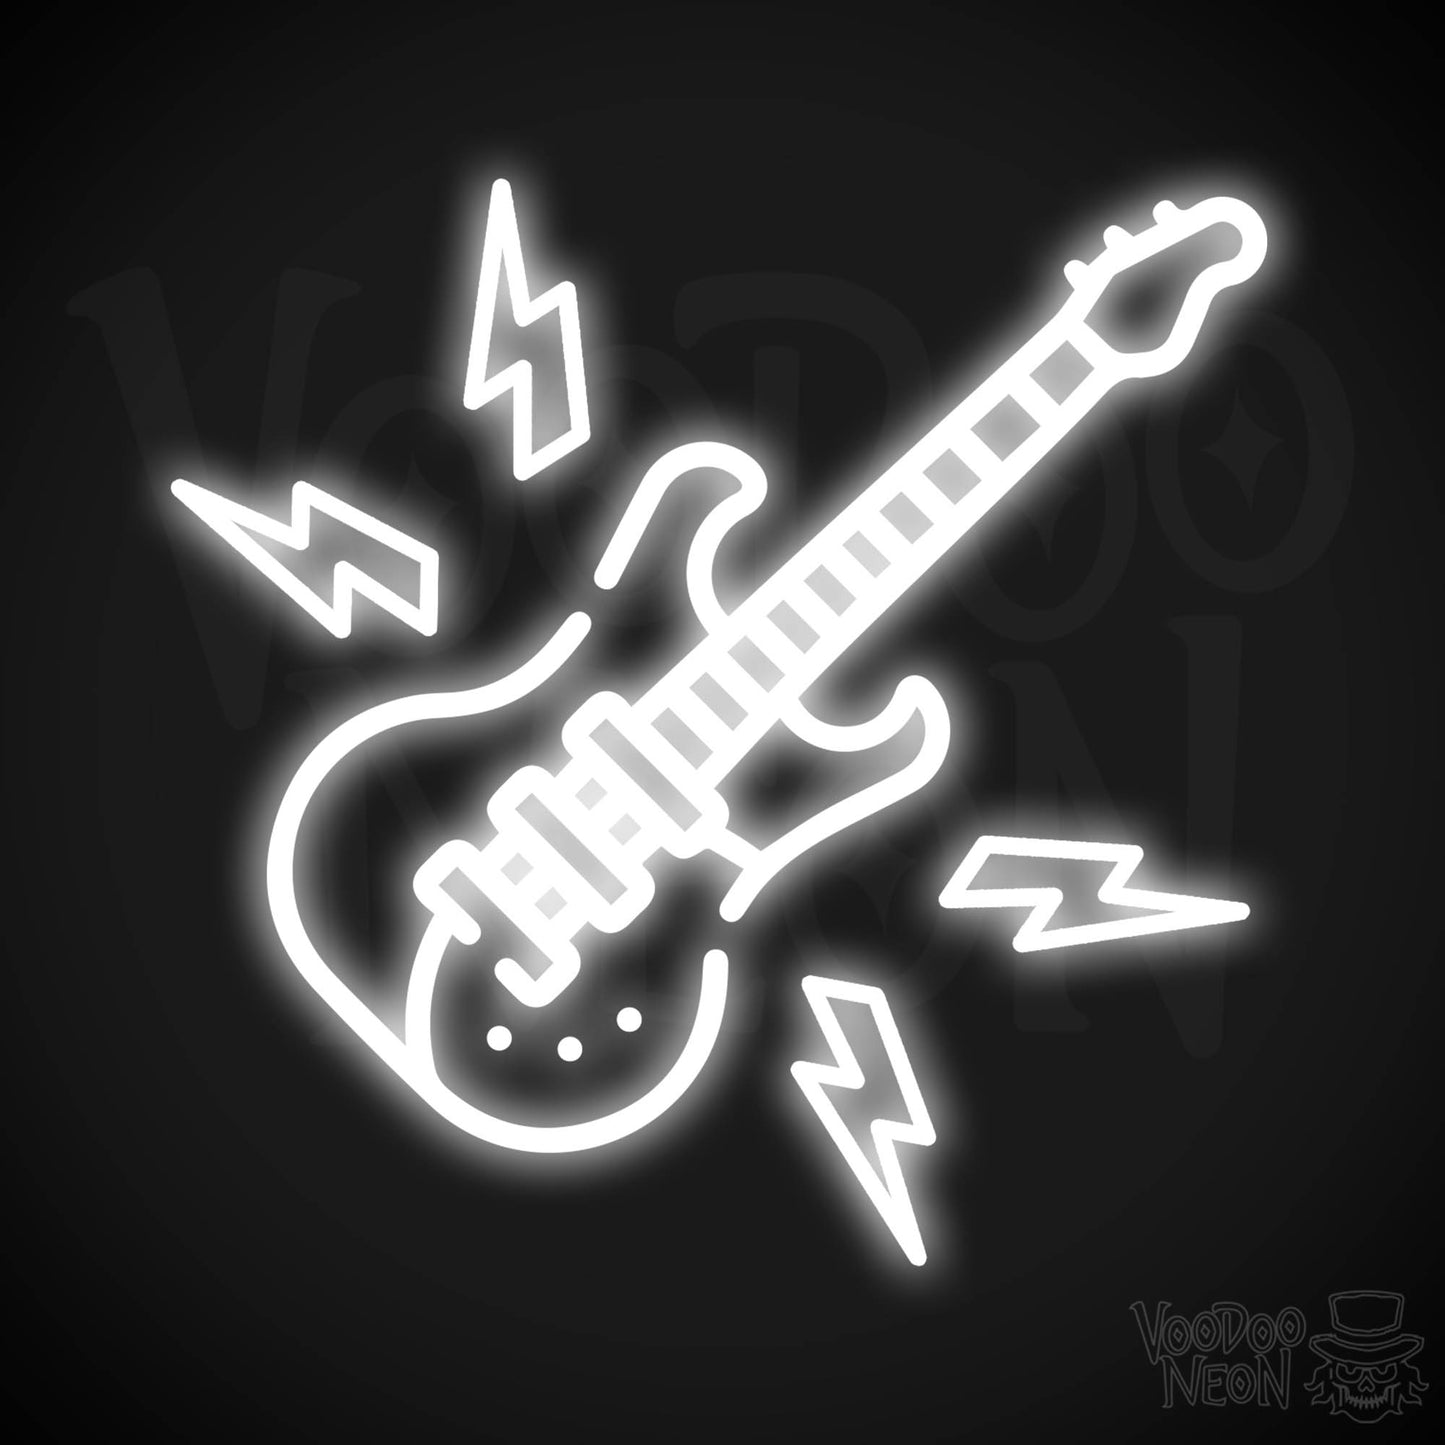 Neon Electric Guitar Sign - Electric Guitar Neon Sign - Electric Guitar Neon Wall Art - Color White